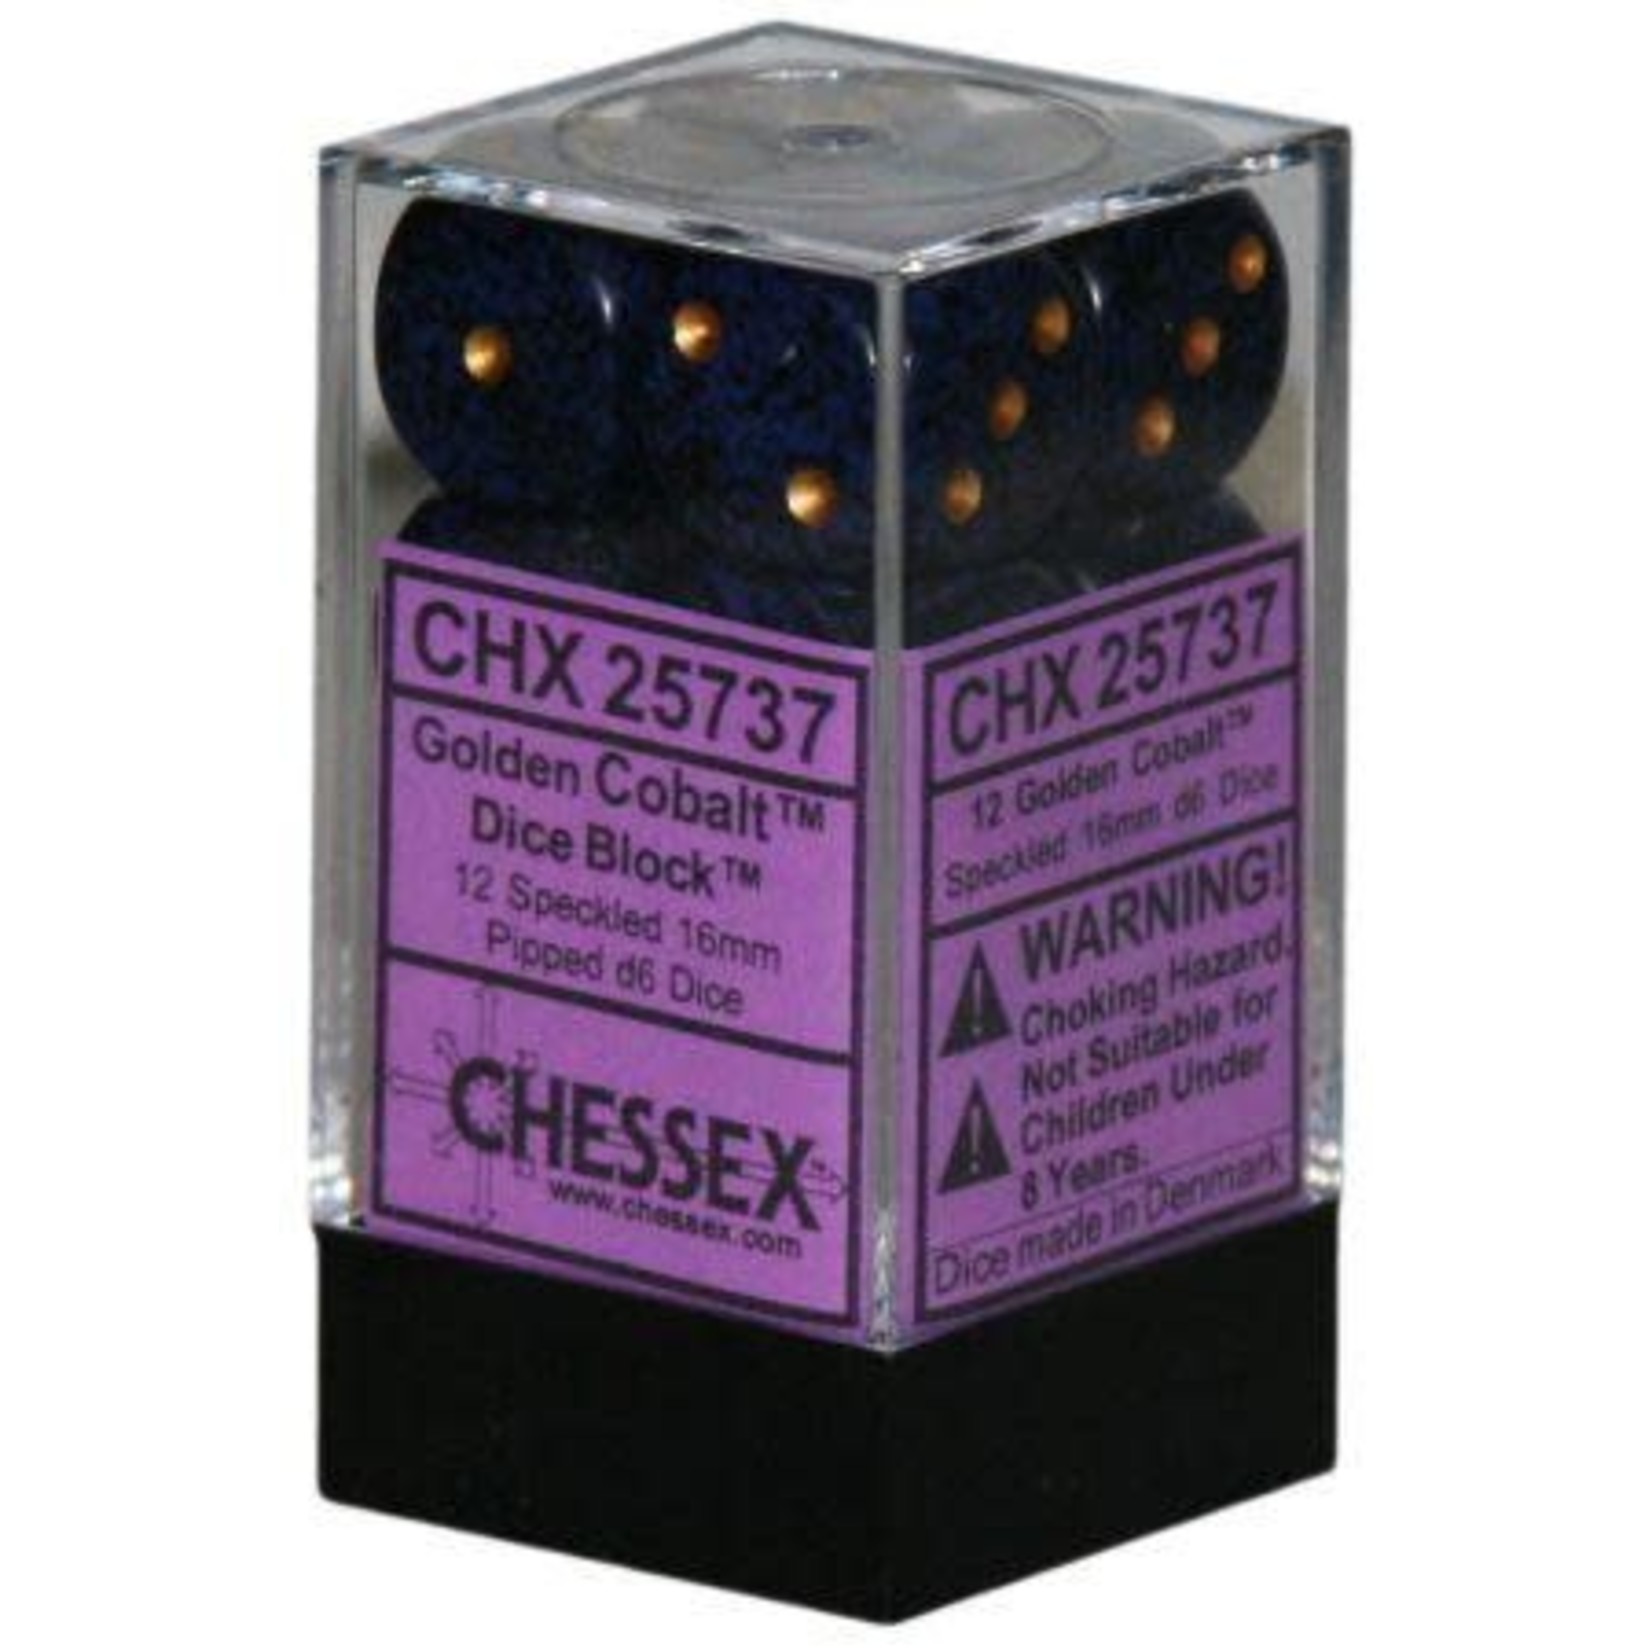 chessex Chessex Dice Speckled 12D6 Golden Cobalt